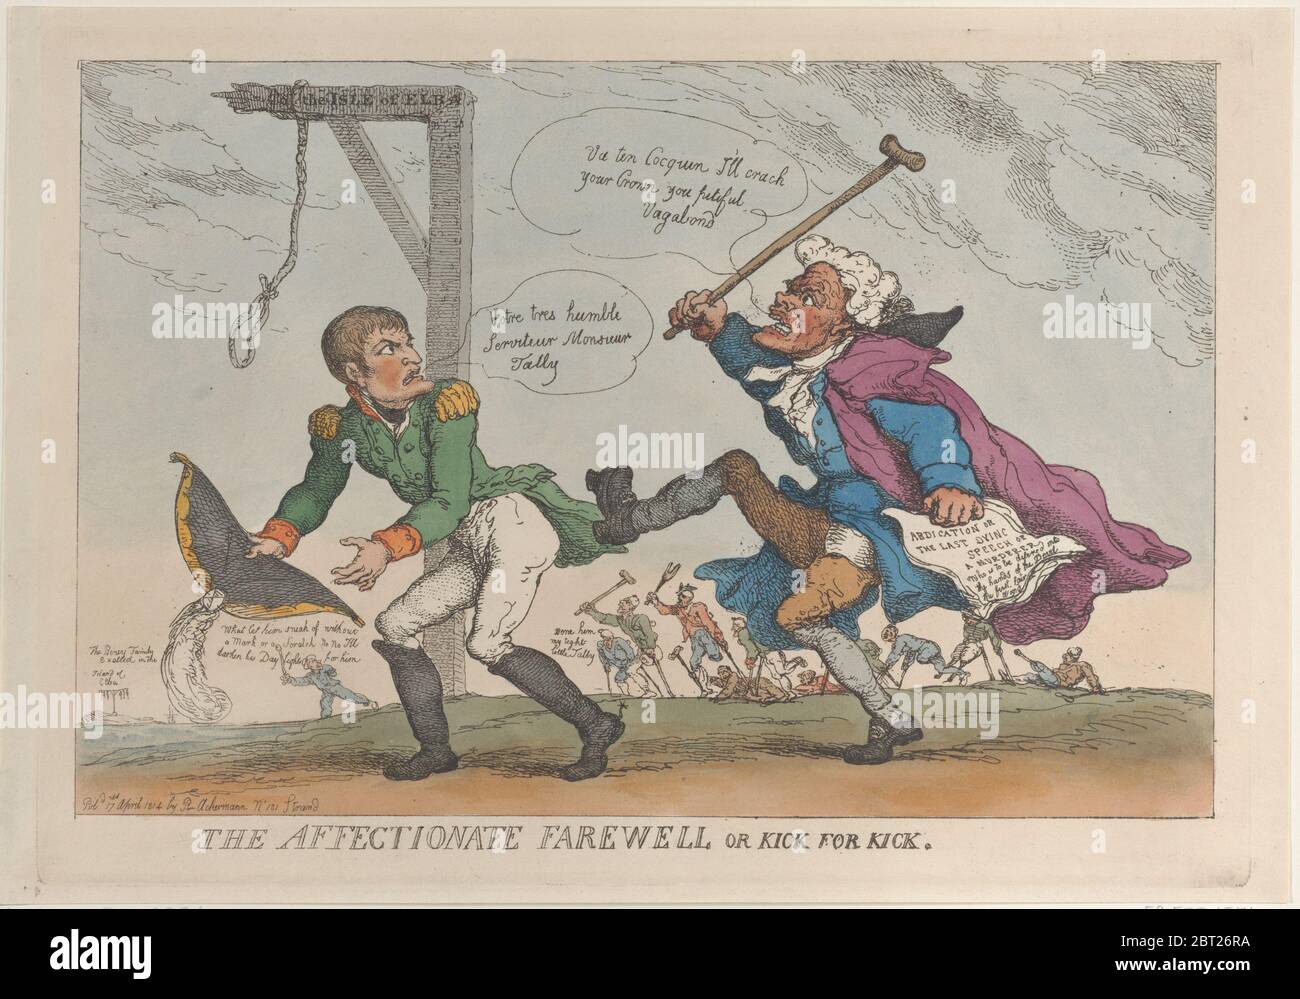 The Affectionate Farewell, or Kick for Kick, April 17, 1814. Stock Photo